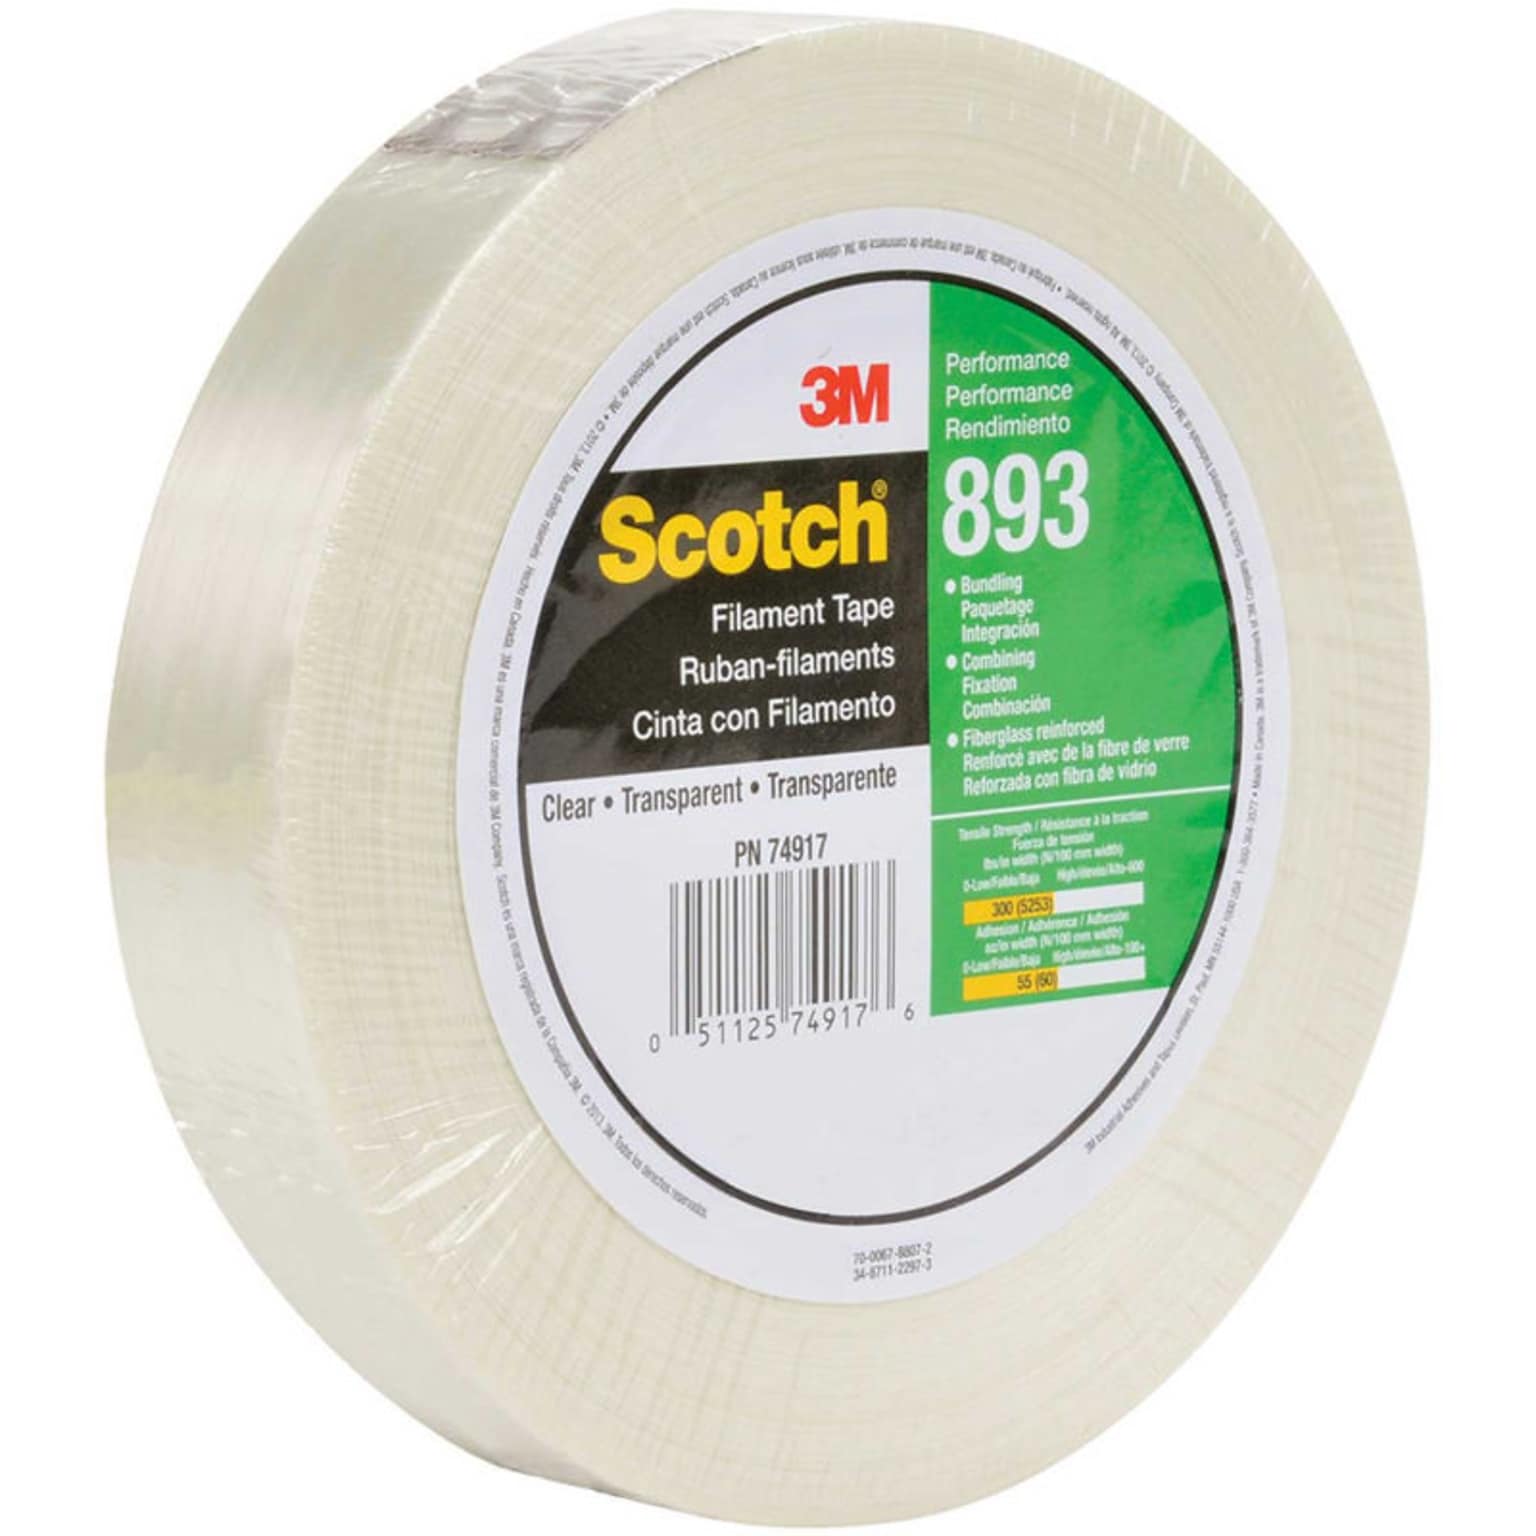 Scotch® Filament Tape 893, Clear, 12 mm x 55 m, 1/Roll (893-12)